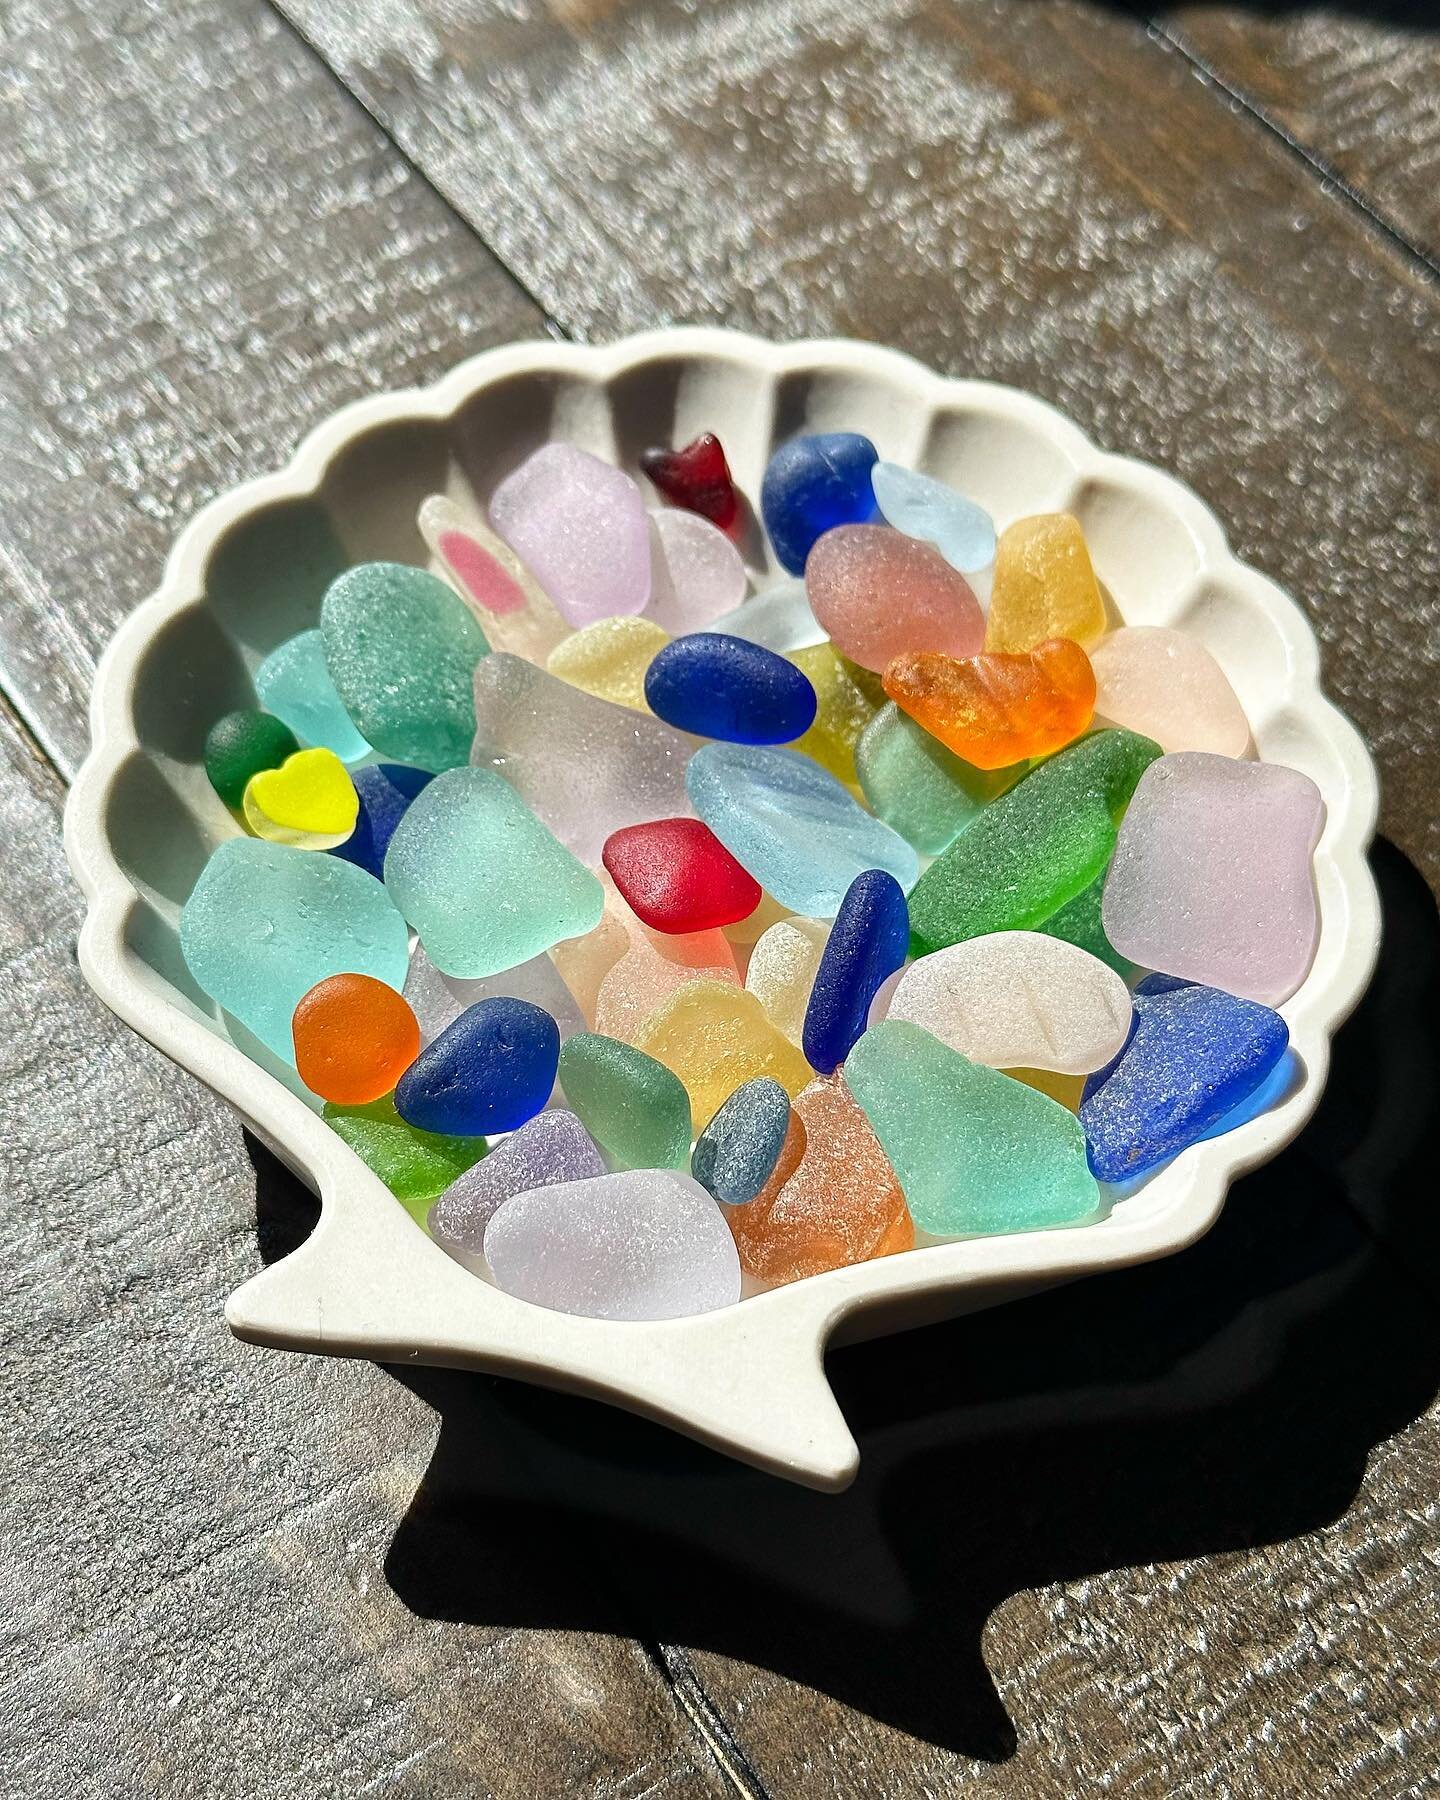 My kind of candy dish 🍭🍬

#seaglass #beachcomber #seacandy #saltylife #coastalliving #rareseaglass #beachlife #seatreasure #treasurehunter #oceanlover